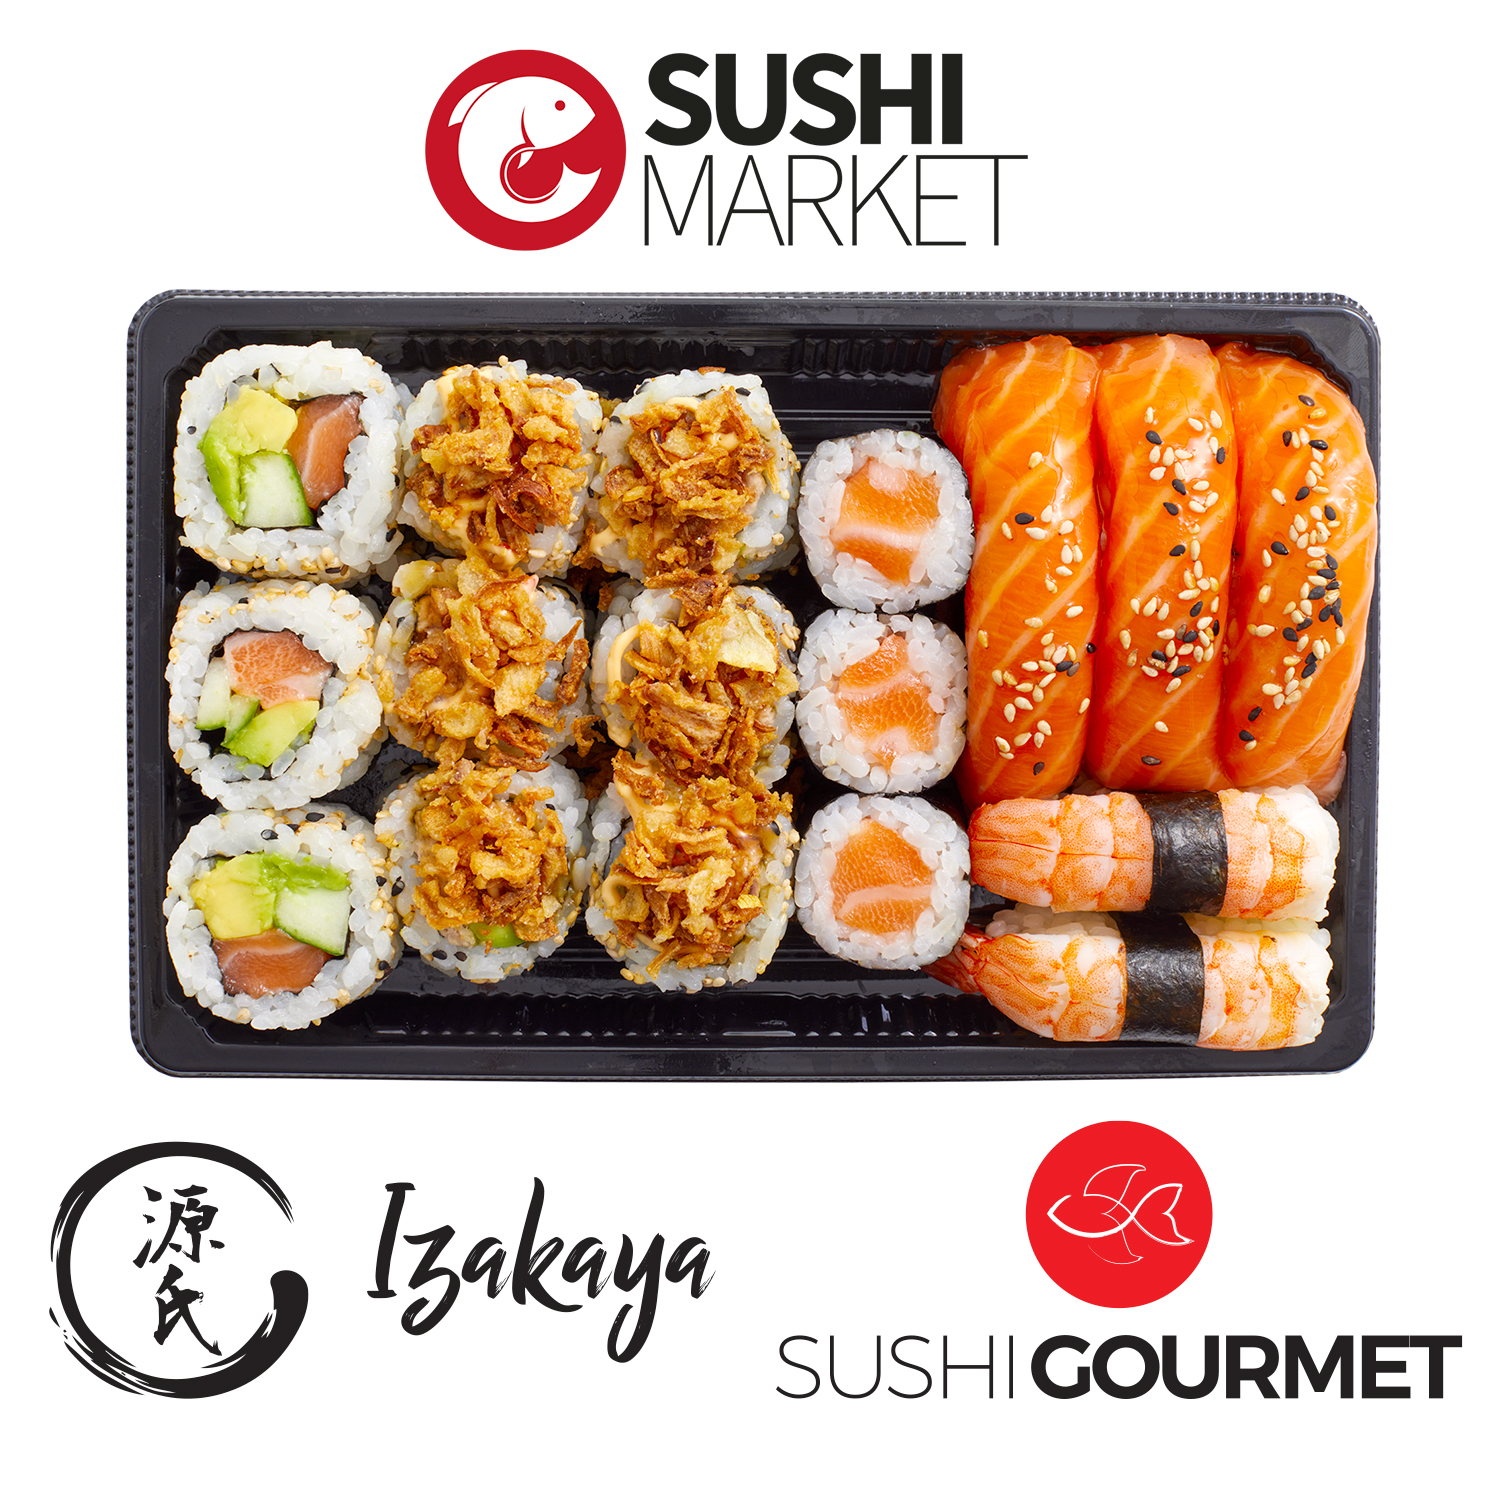 Sushi Market, Sushi Gourmet & Isakaya